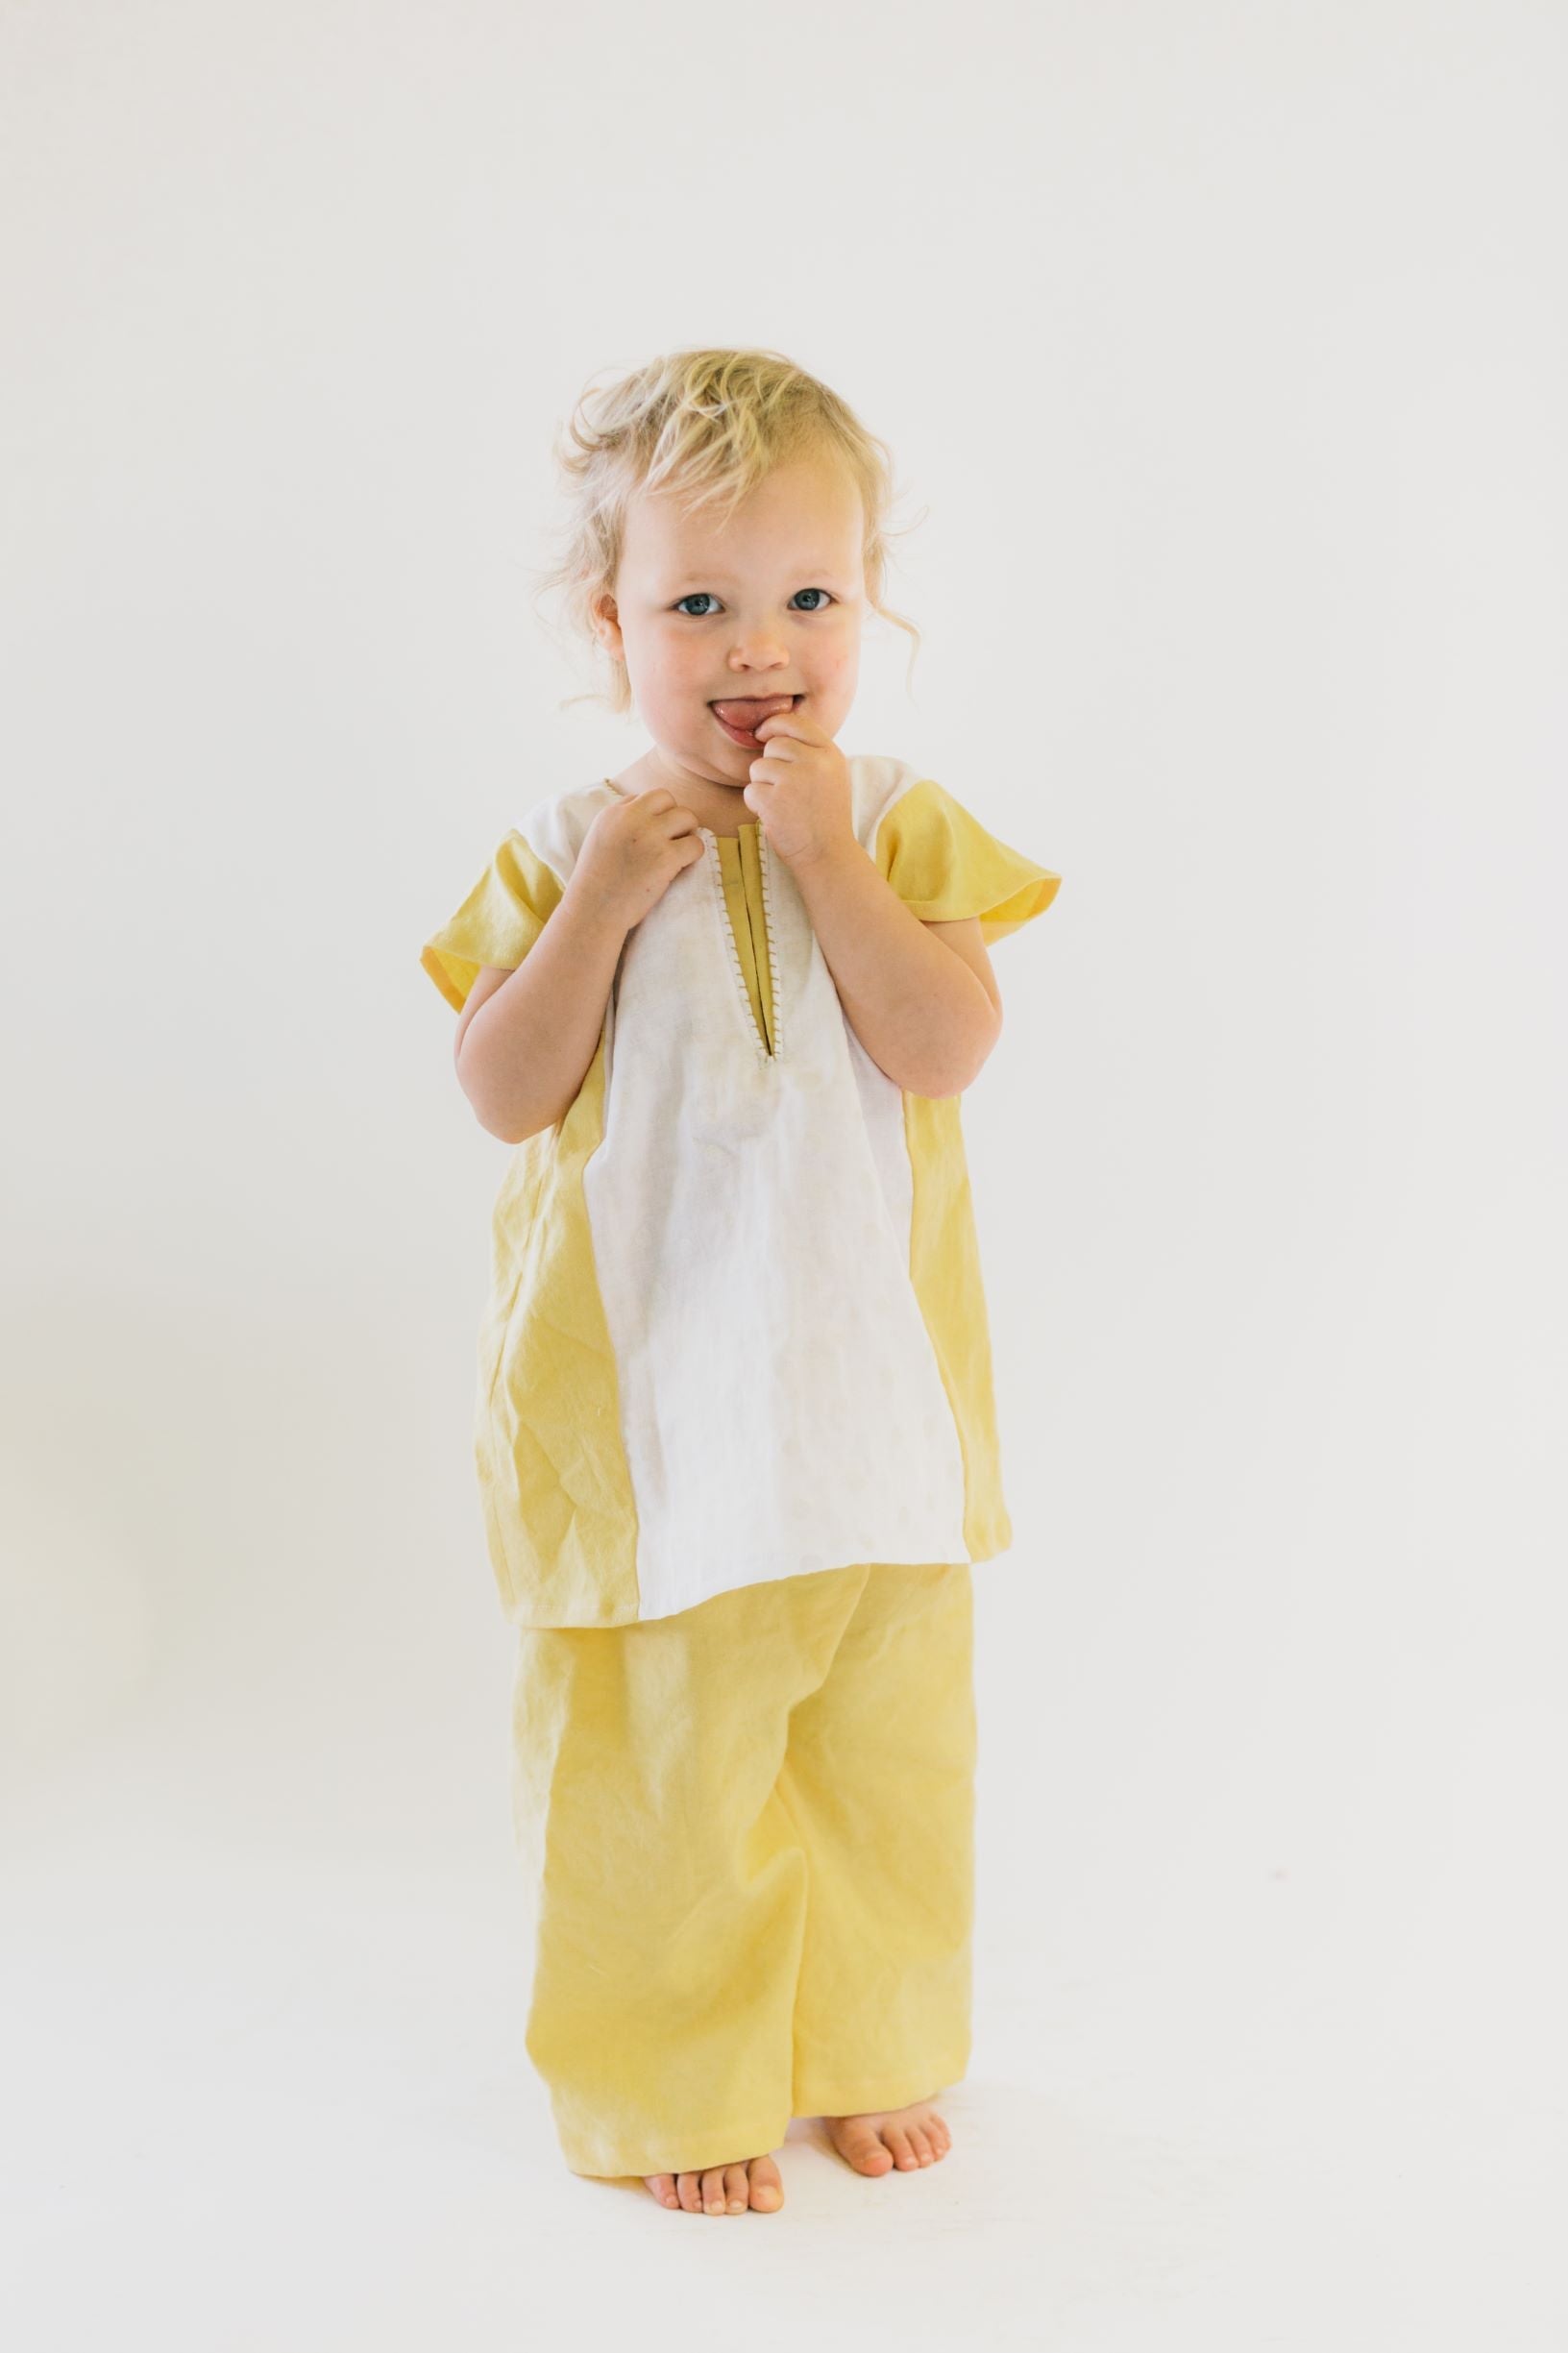 Small child wearing a yellow and white Turkish tunic and yellow pants.